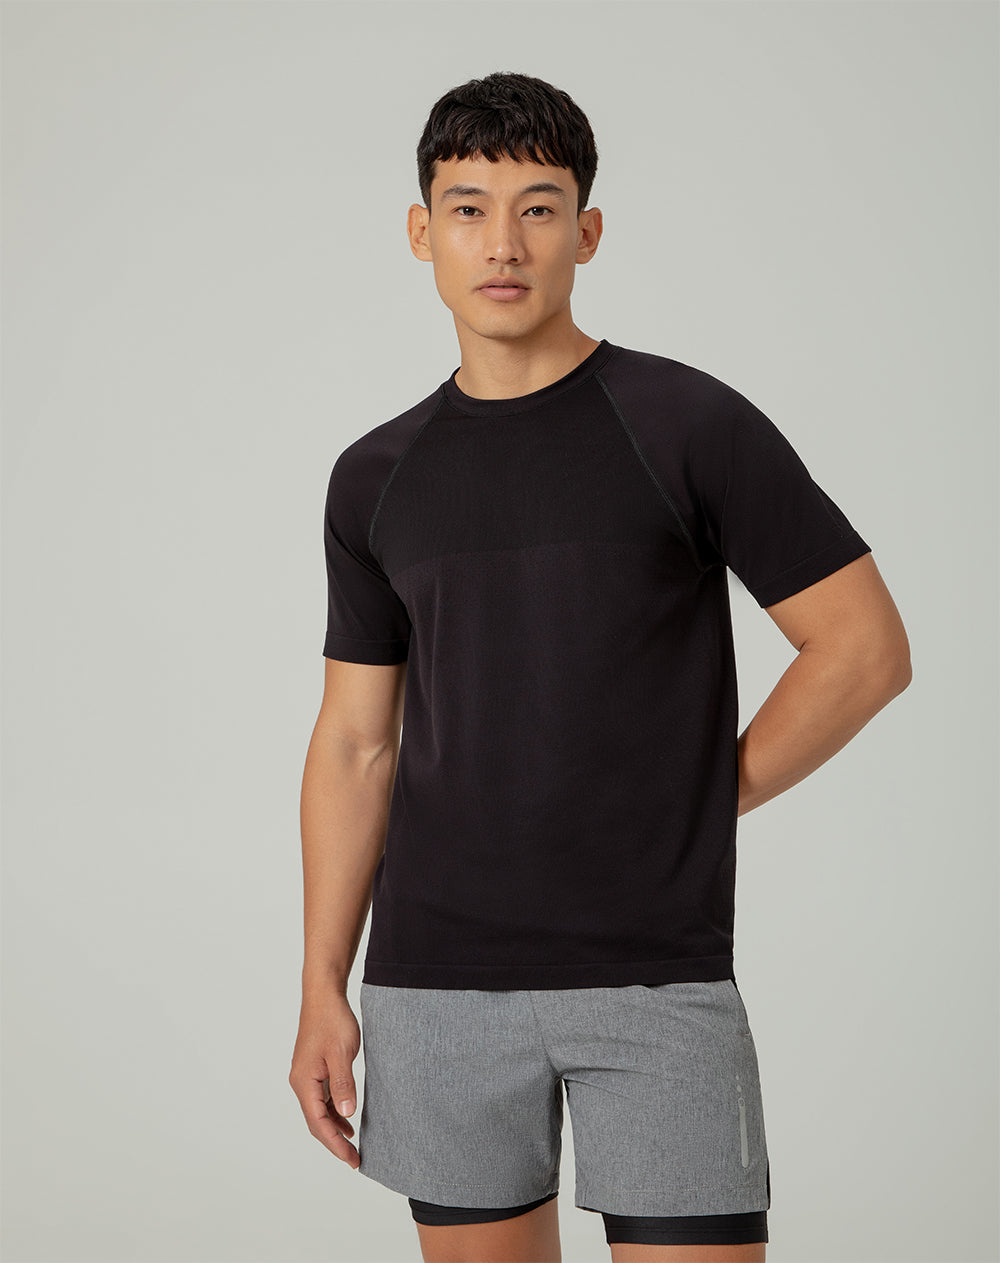 Camiseta slim fit manga corta negra